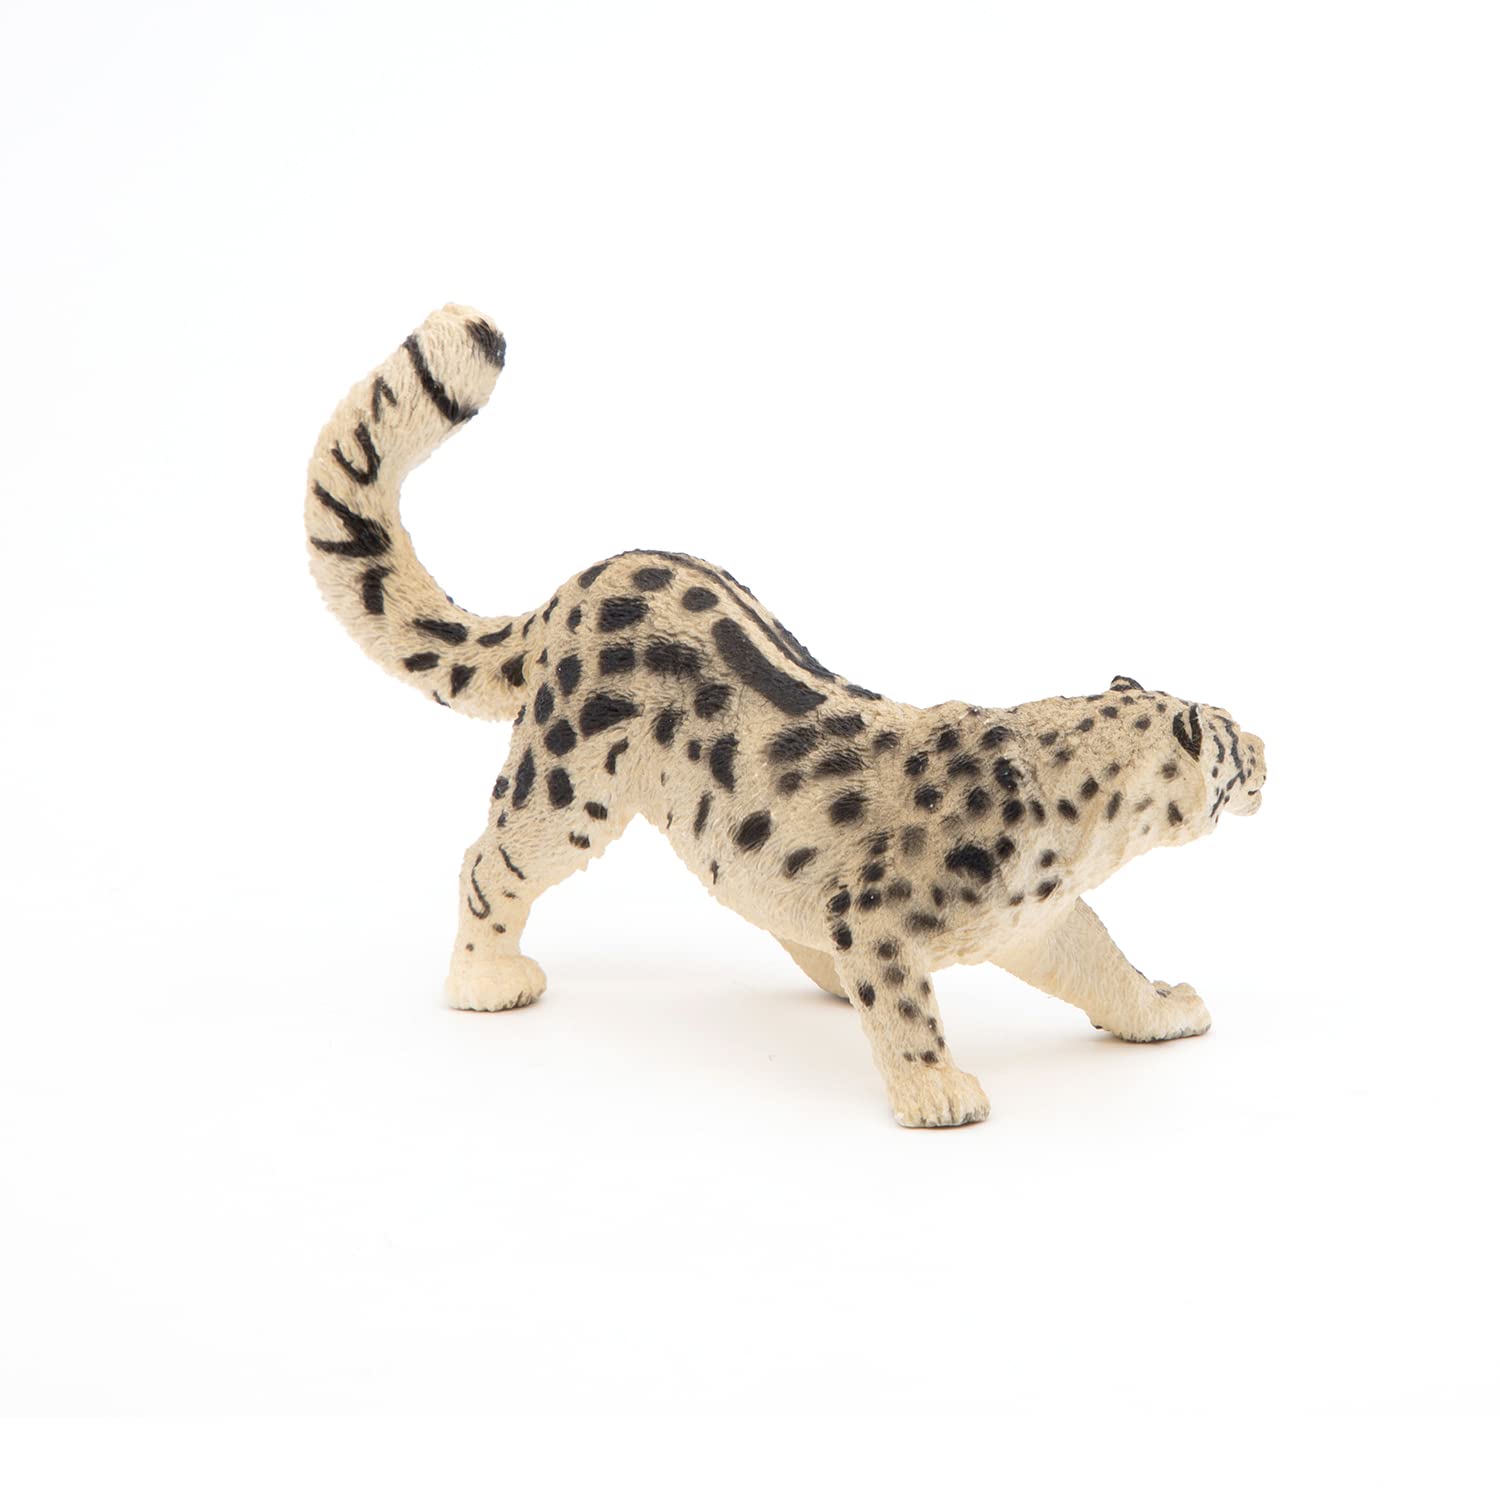 Papo Snow Leopard Toy Figure